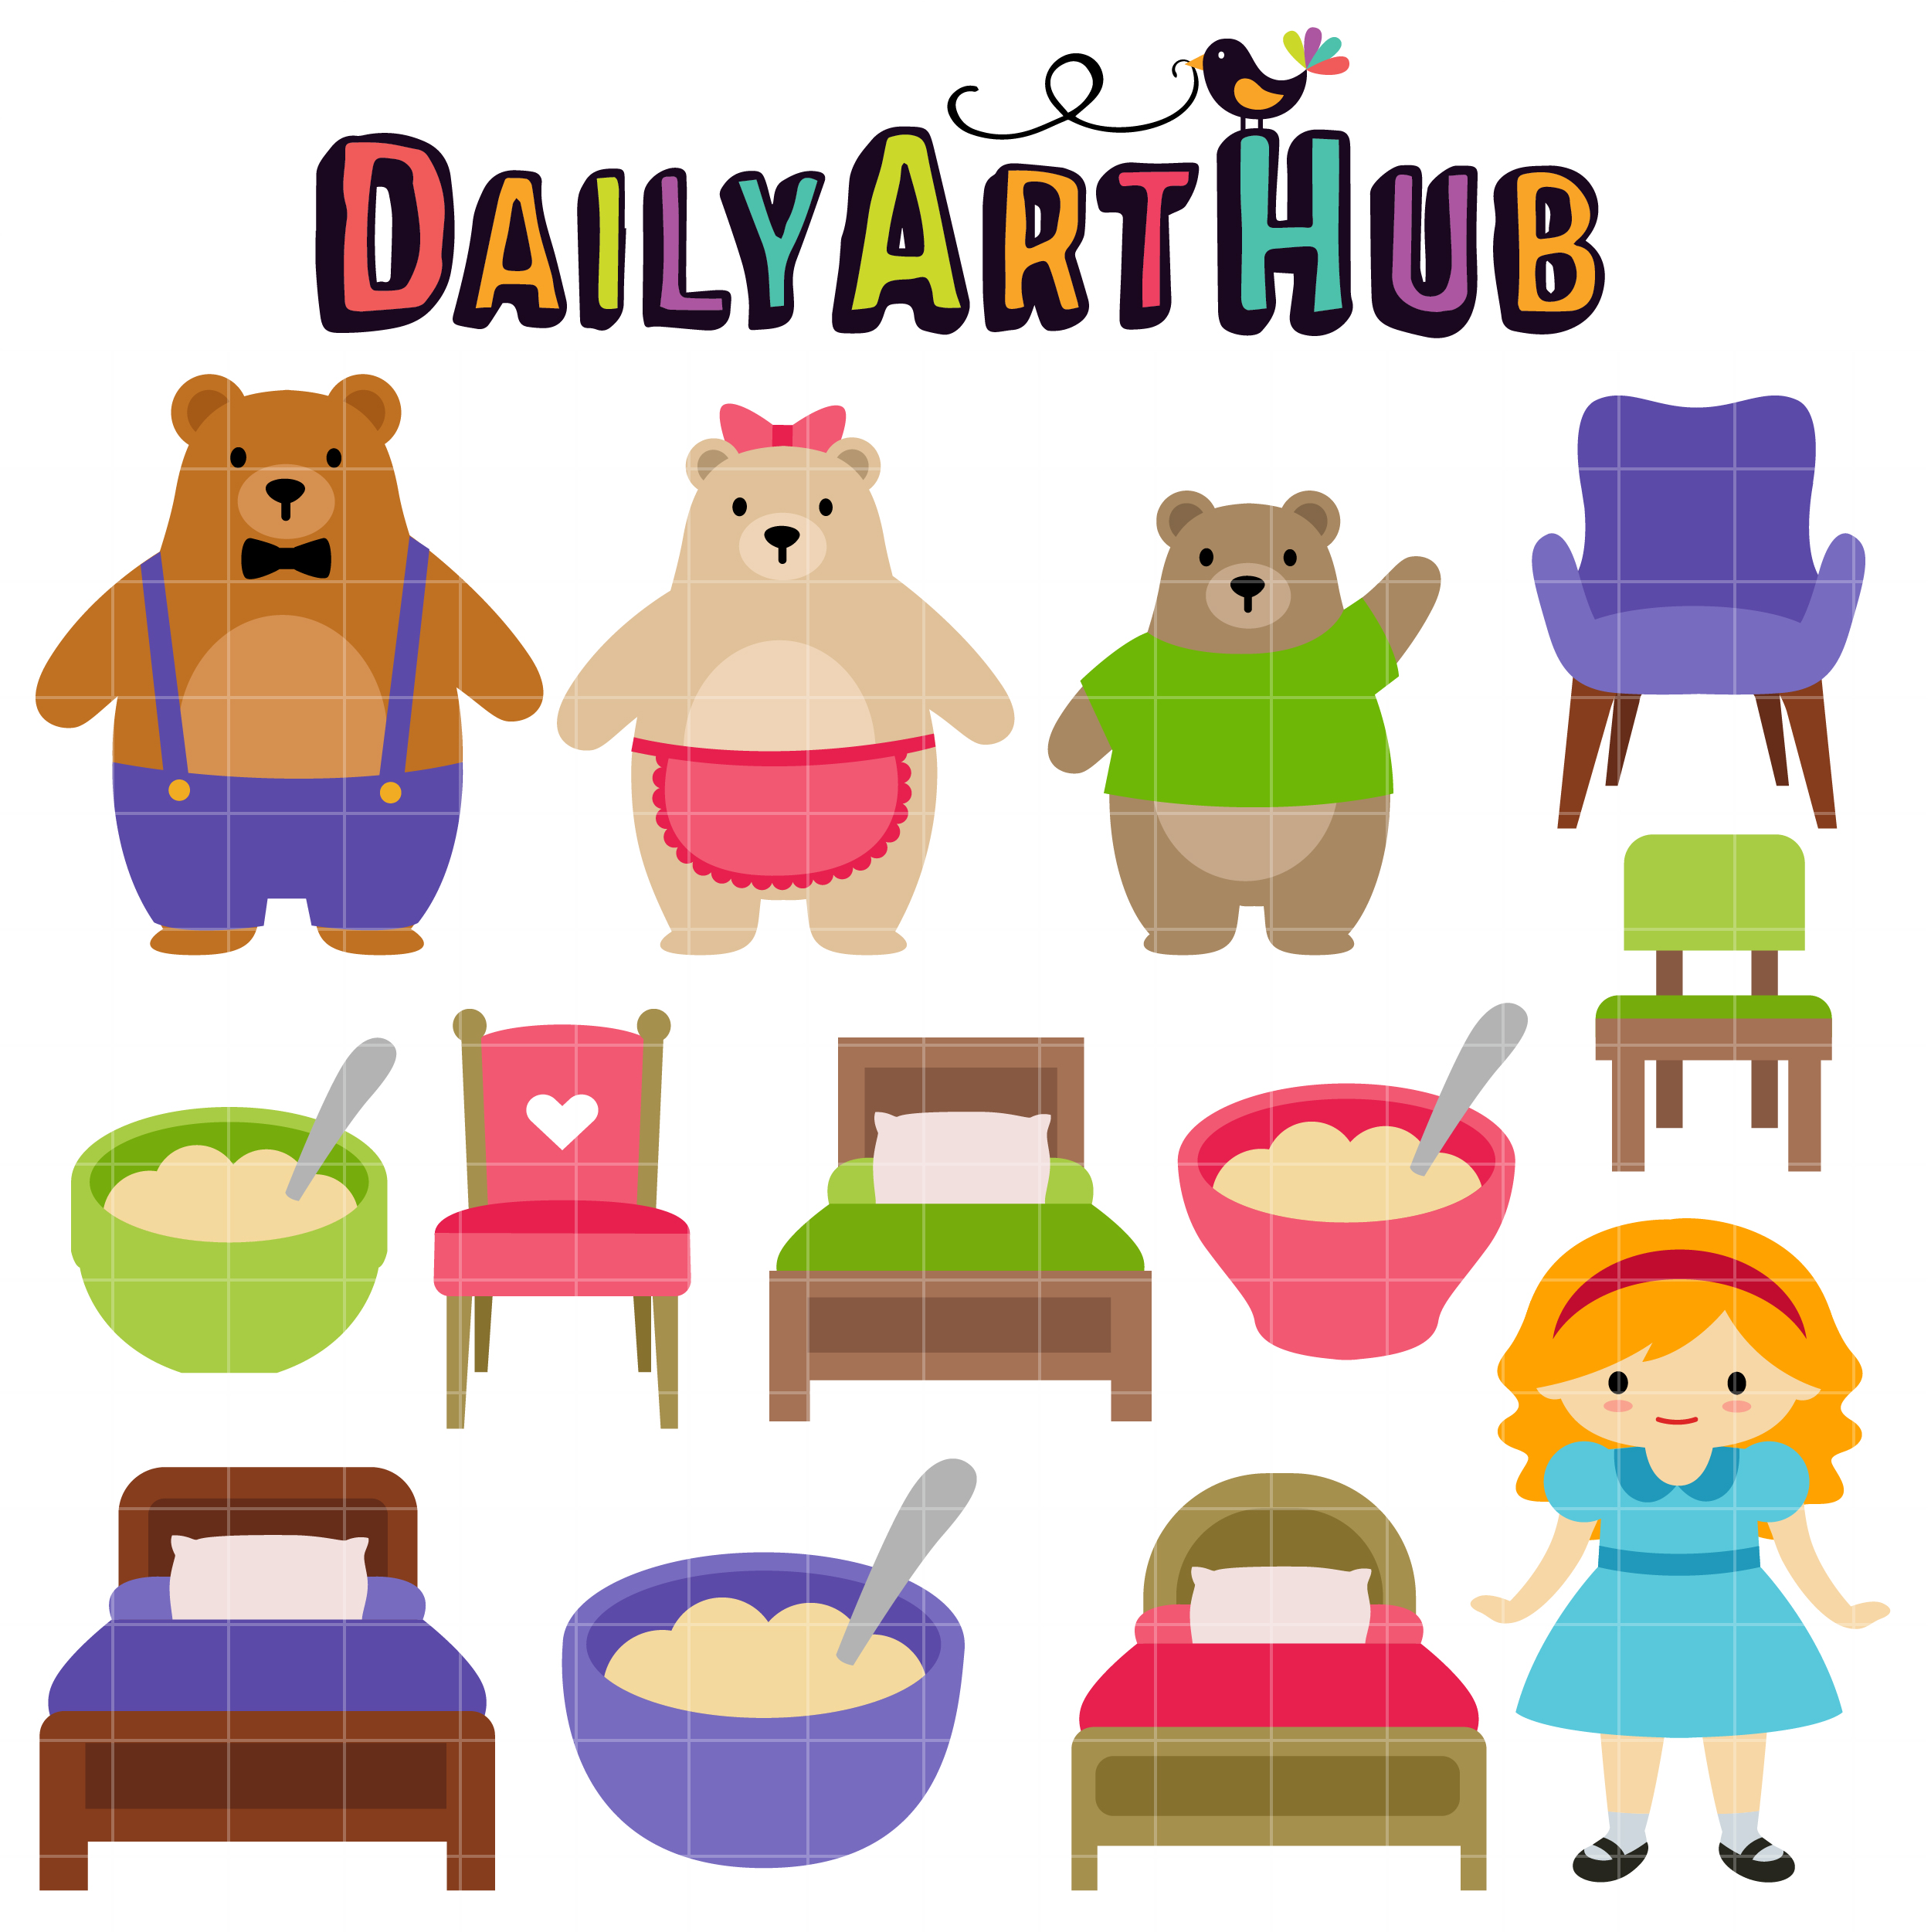 goldilocks-and-the-three-bear-clip-art-set-daily-art-hub-free-clip